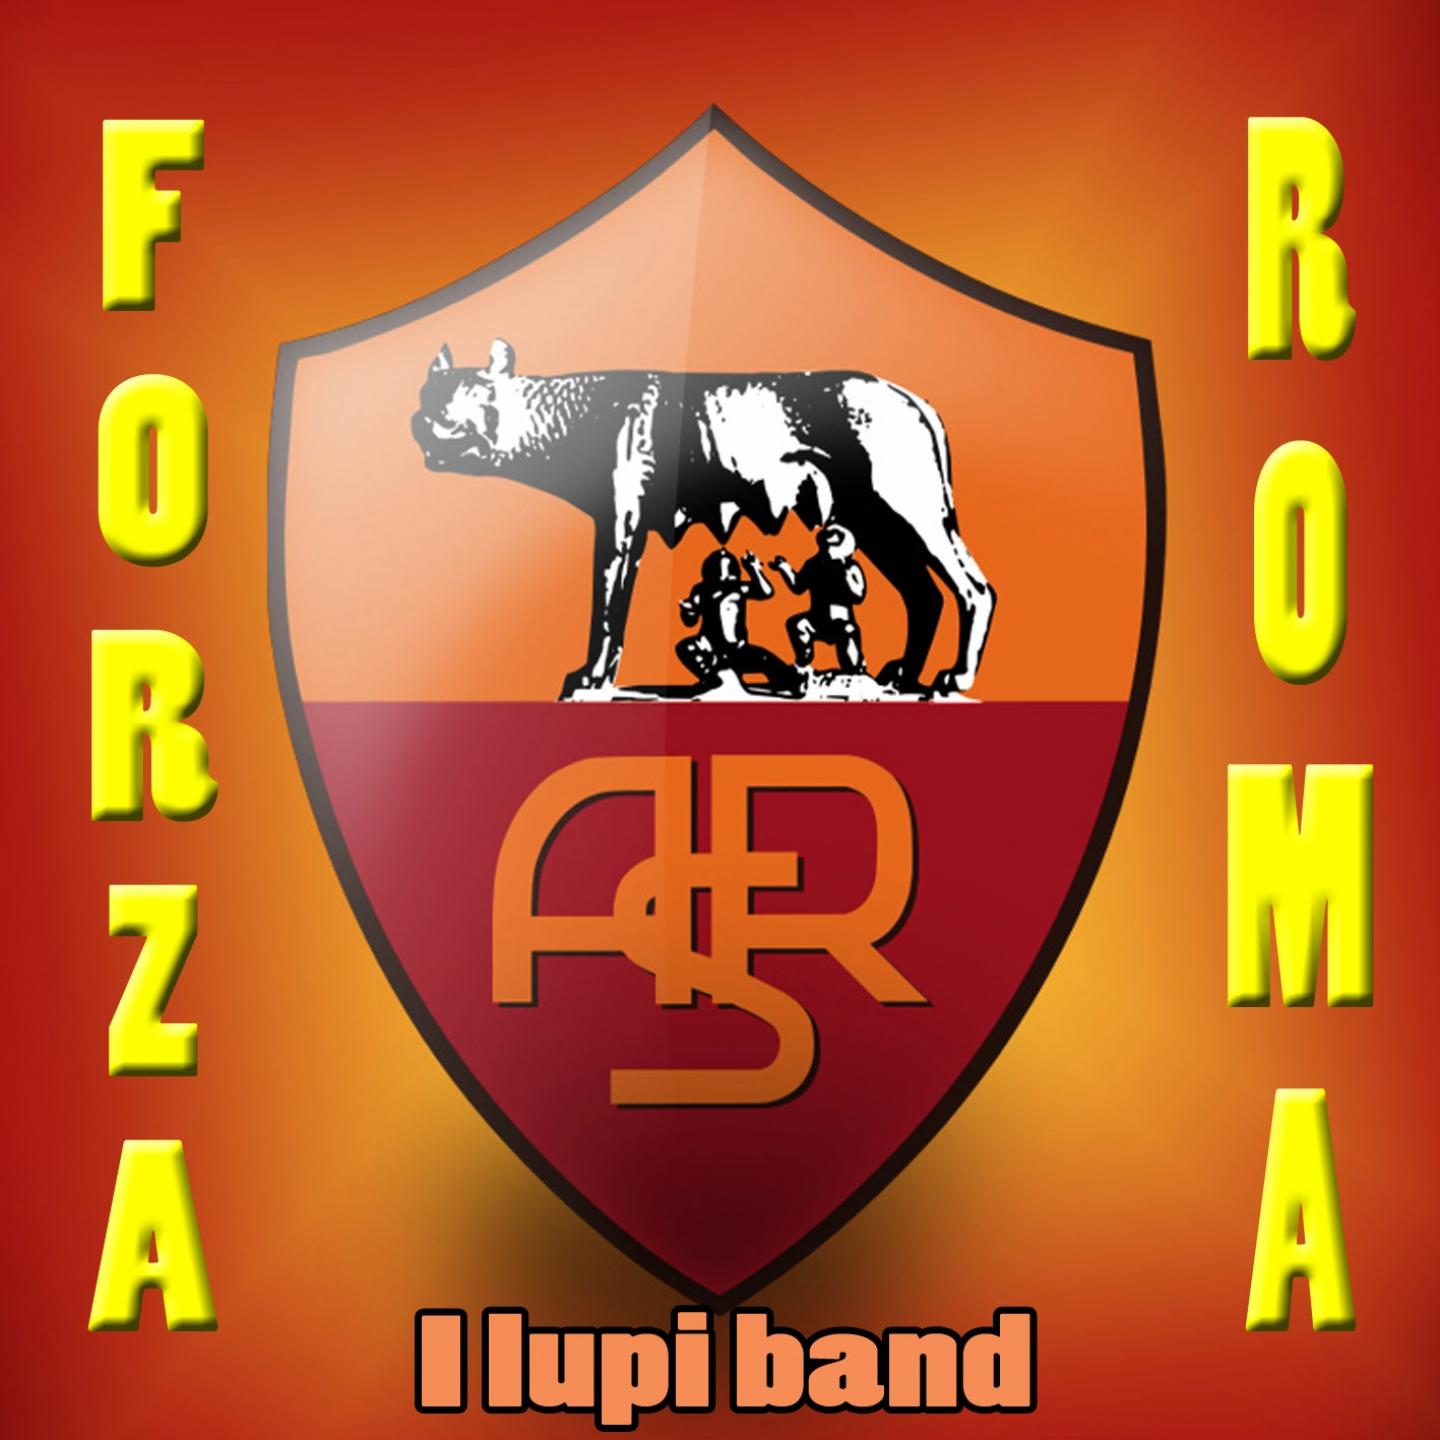 Forza Roma (Calcio, Serie A)